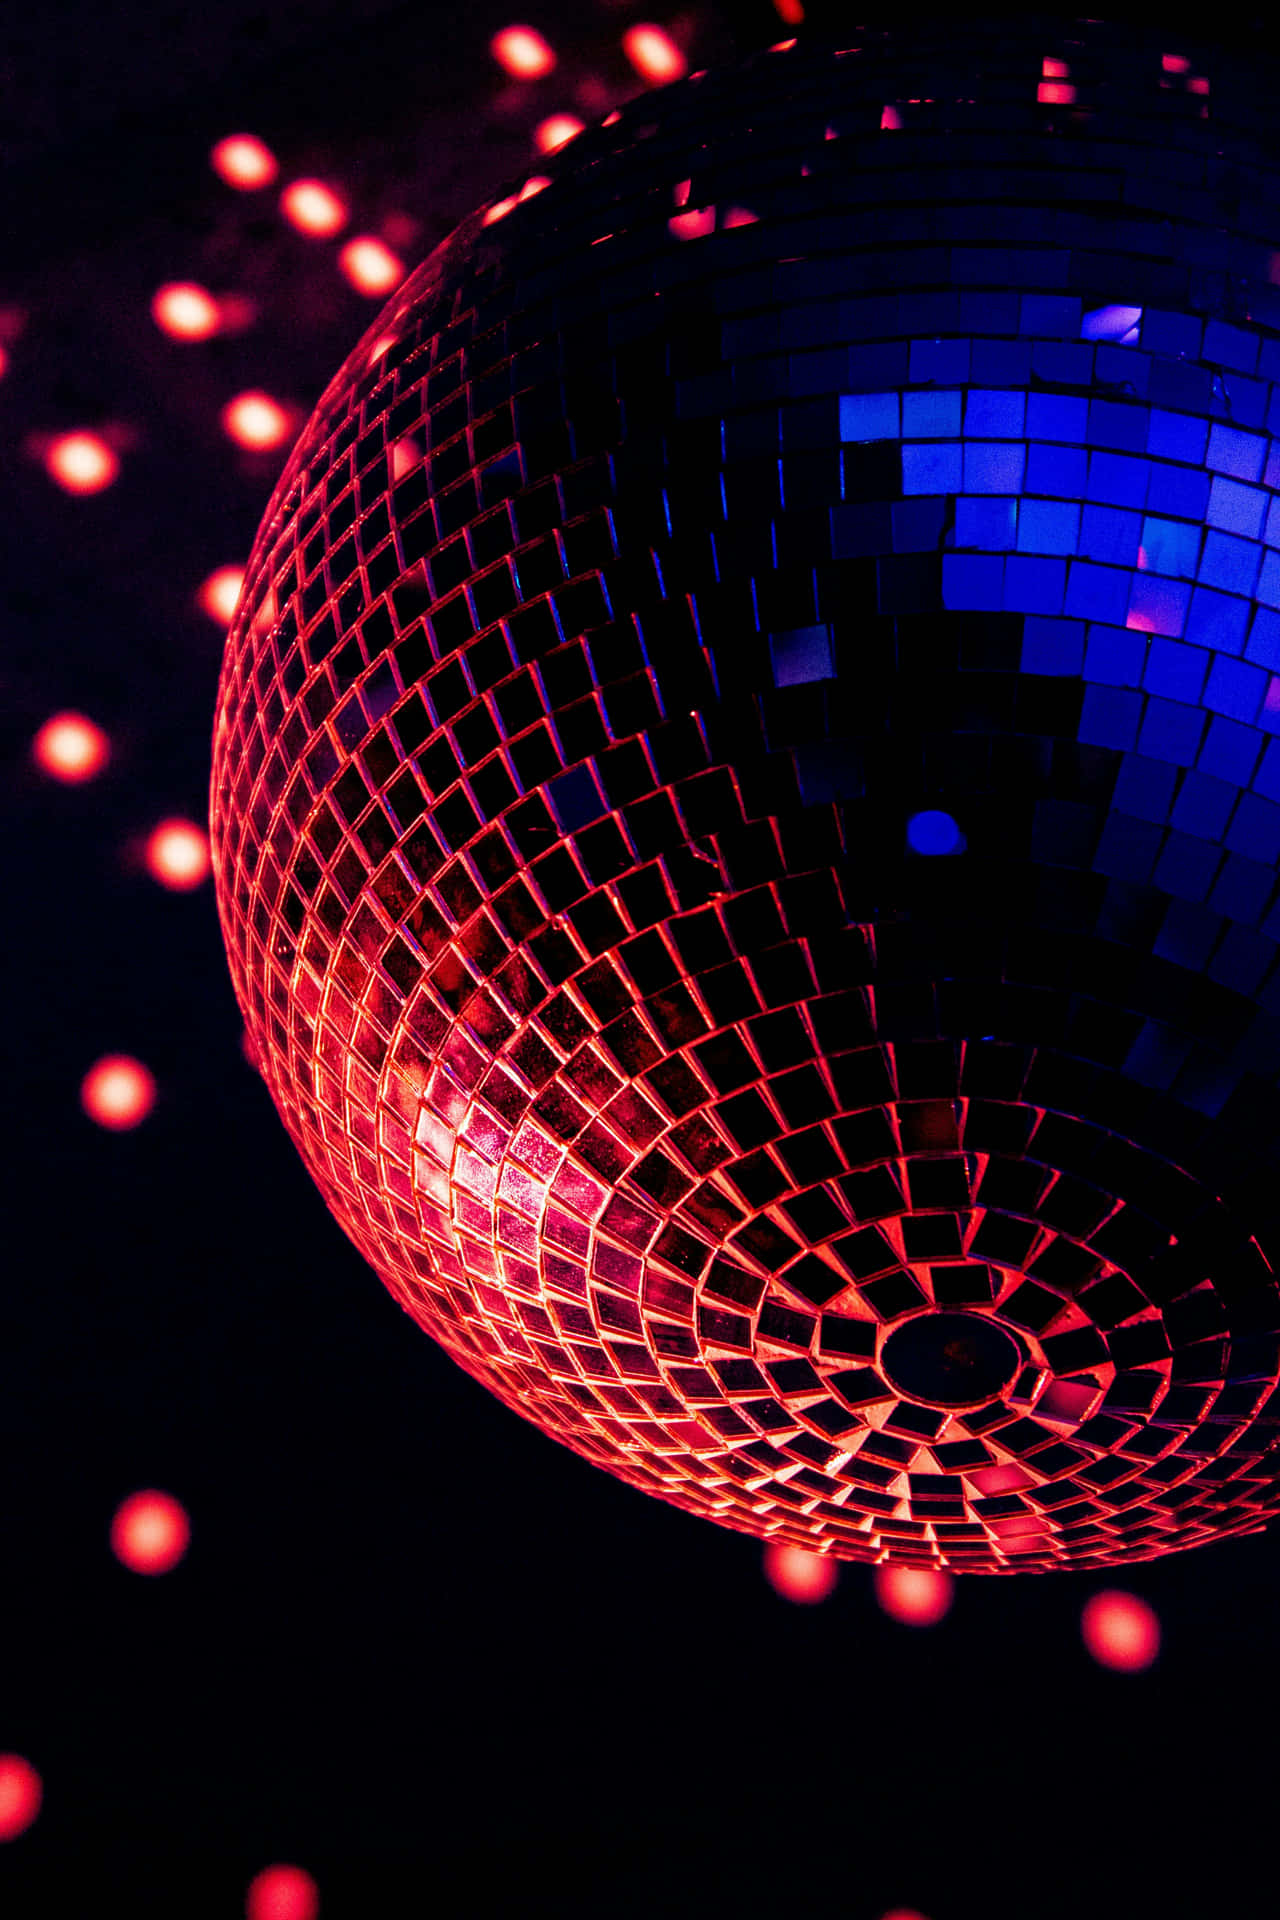 Glowing Disco Ball Nightlife.jpg Background